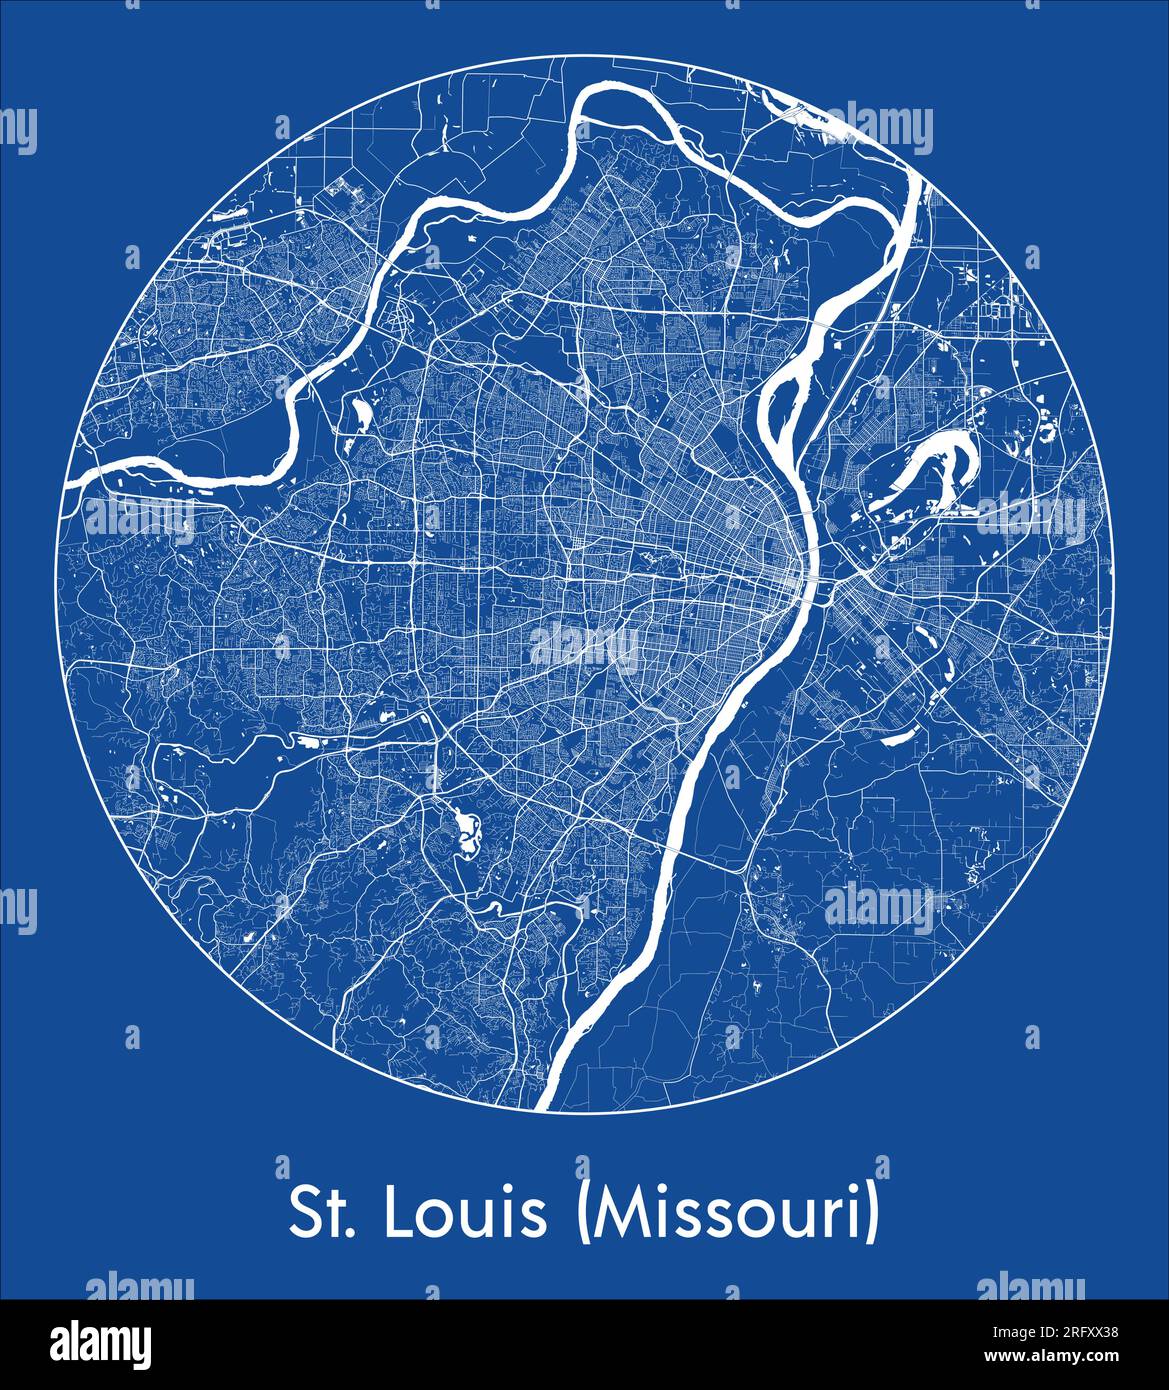 City Map St. Louis Missouri United States North America blue print round Circle vector illustration Stock Vector